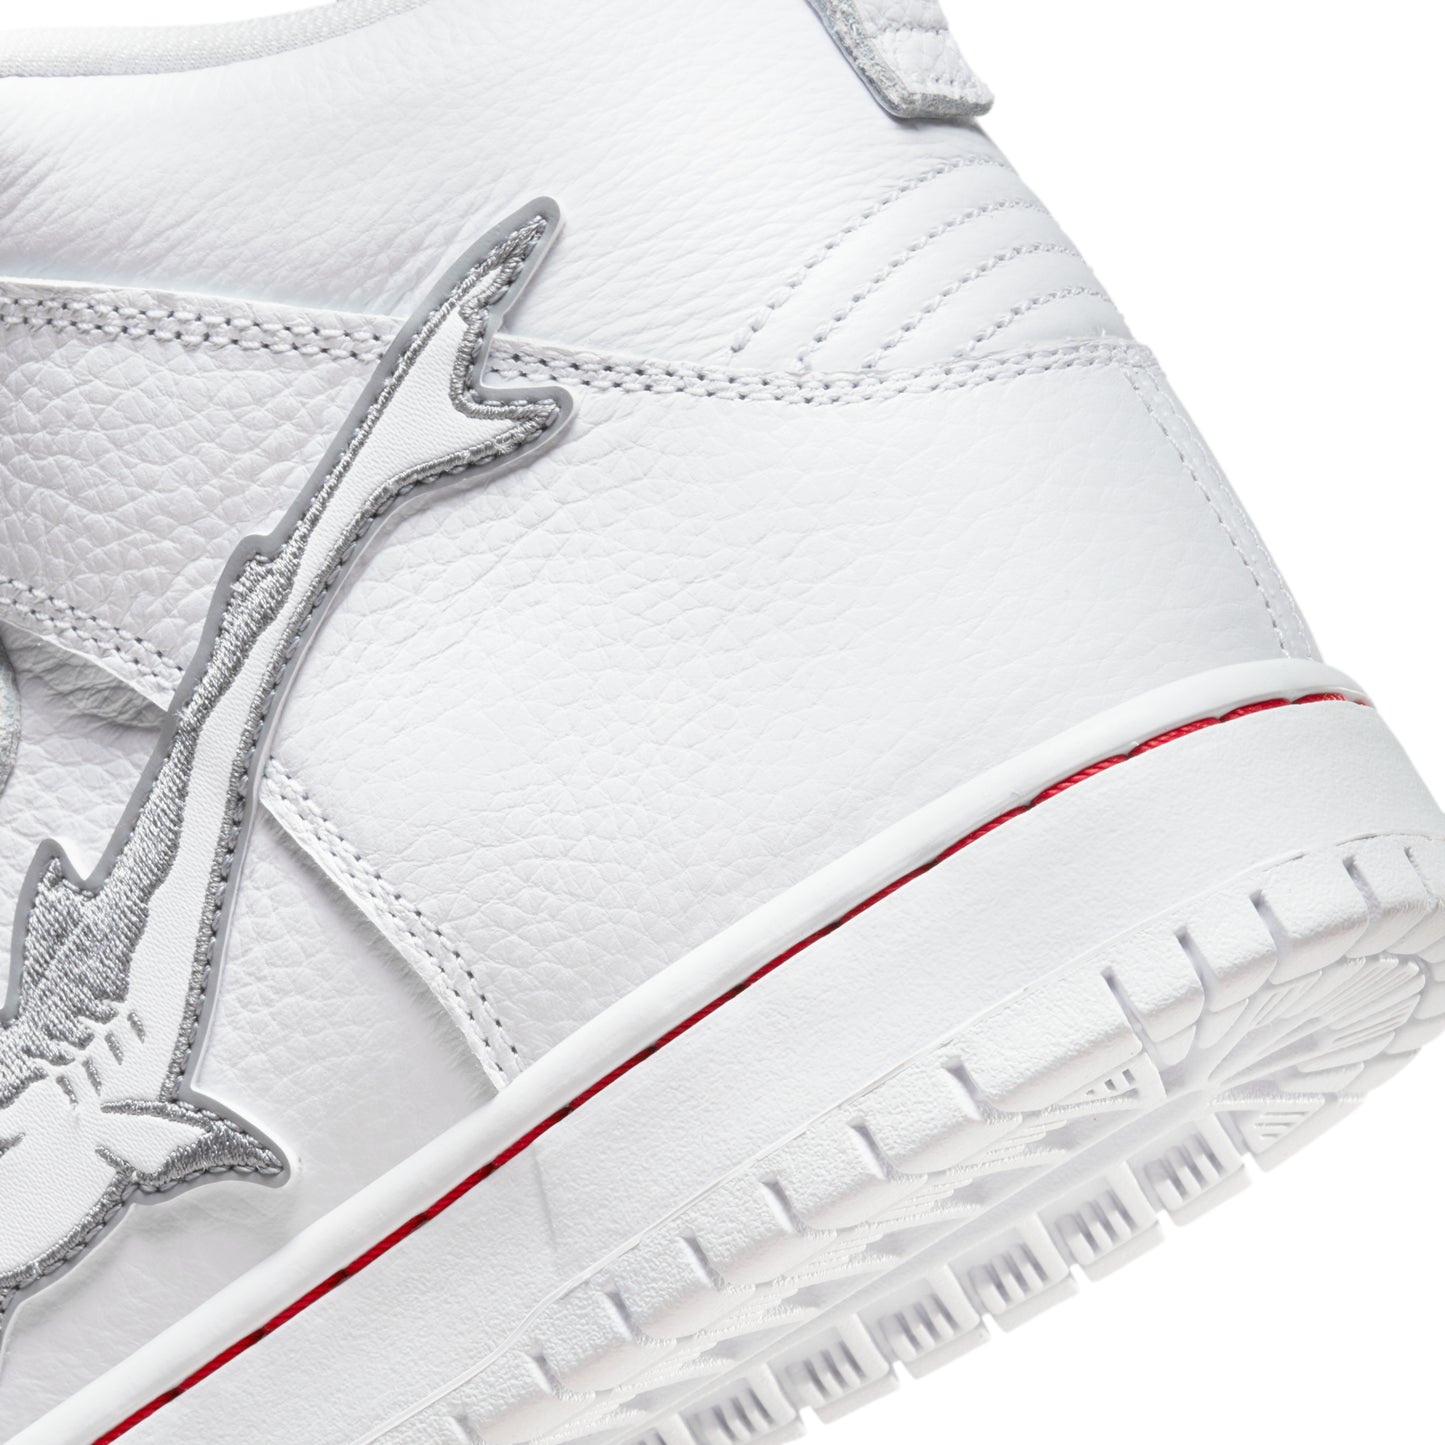 Nike SB x Oski Dunk High Pro ISO "Great White"